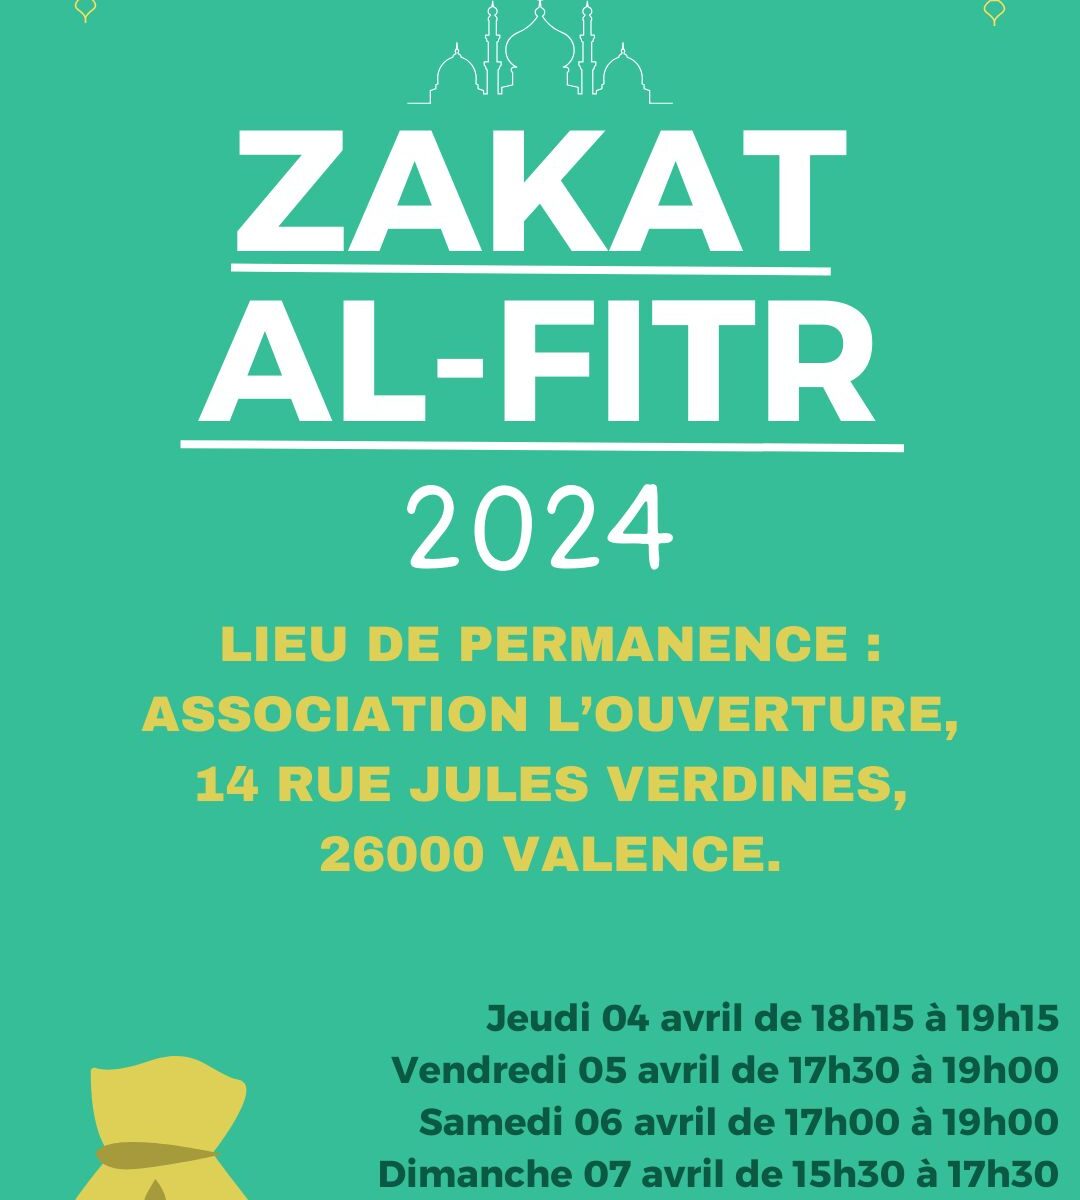 Zakat Al-Fitr 2024